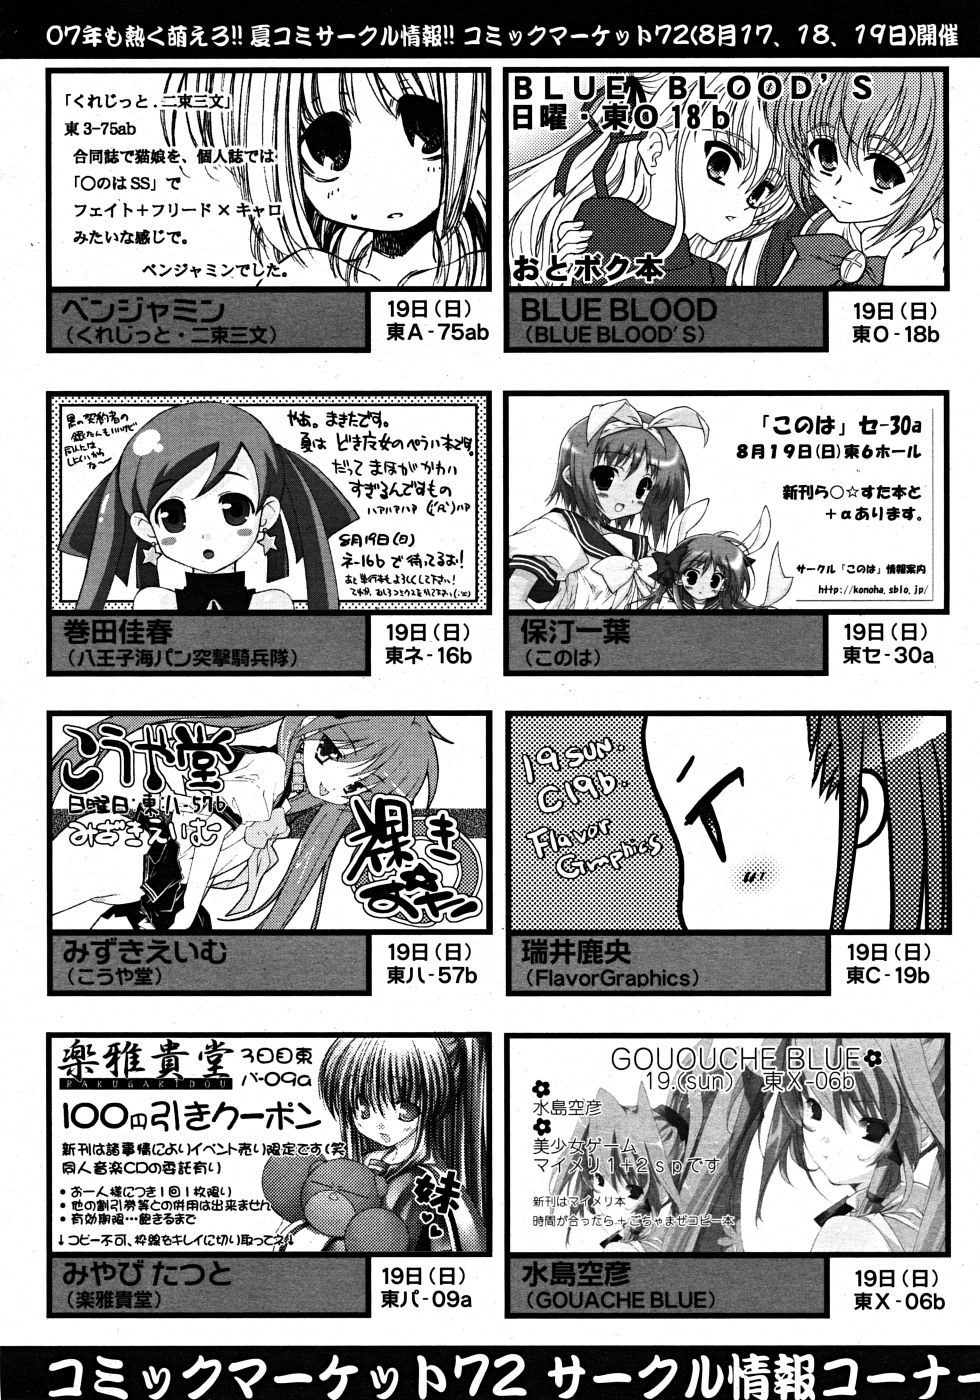 Comic Rin Vol. 33 2007年 9月